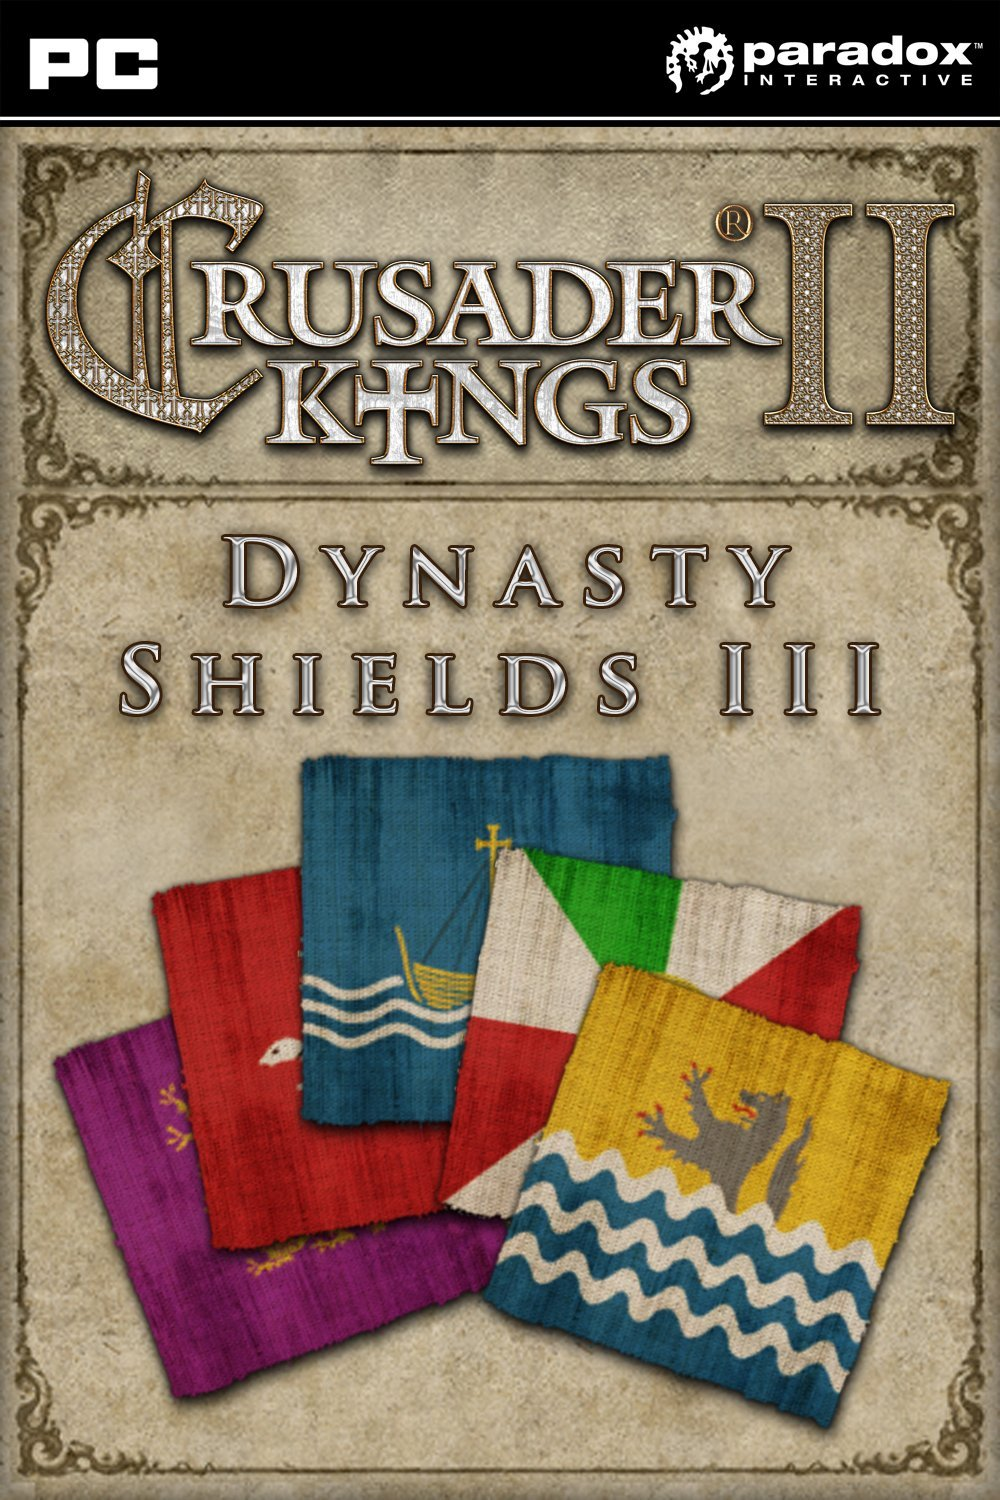 crusader kings iii wiki